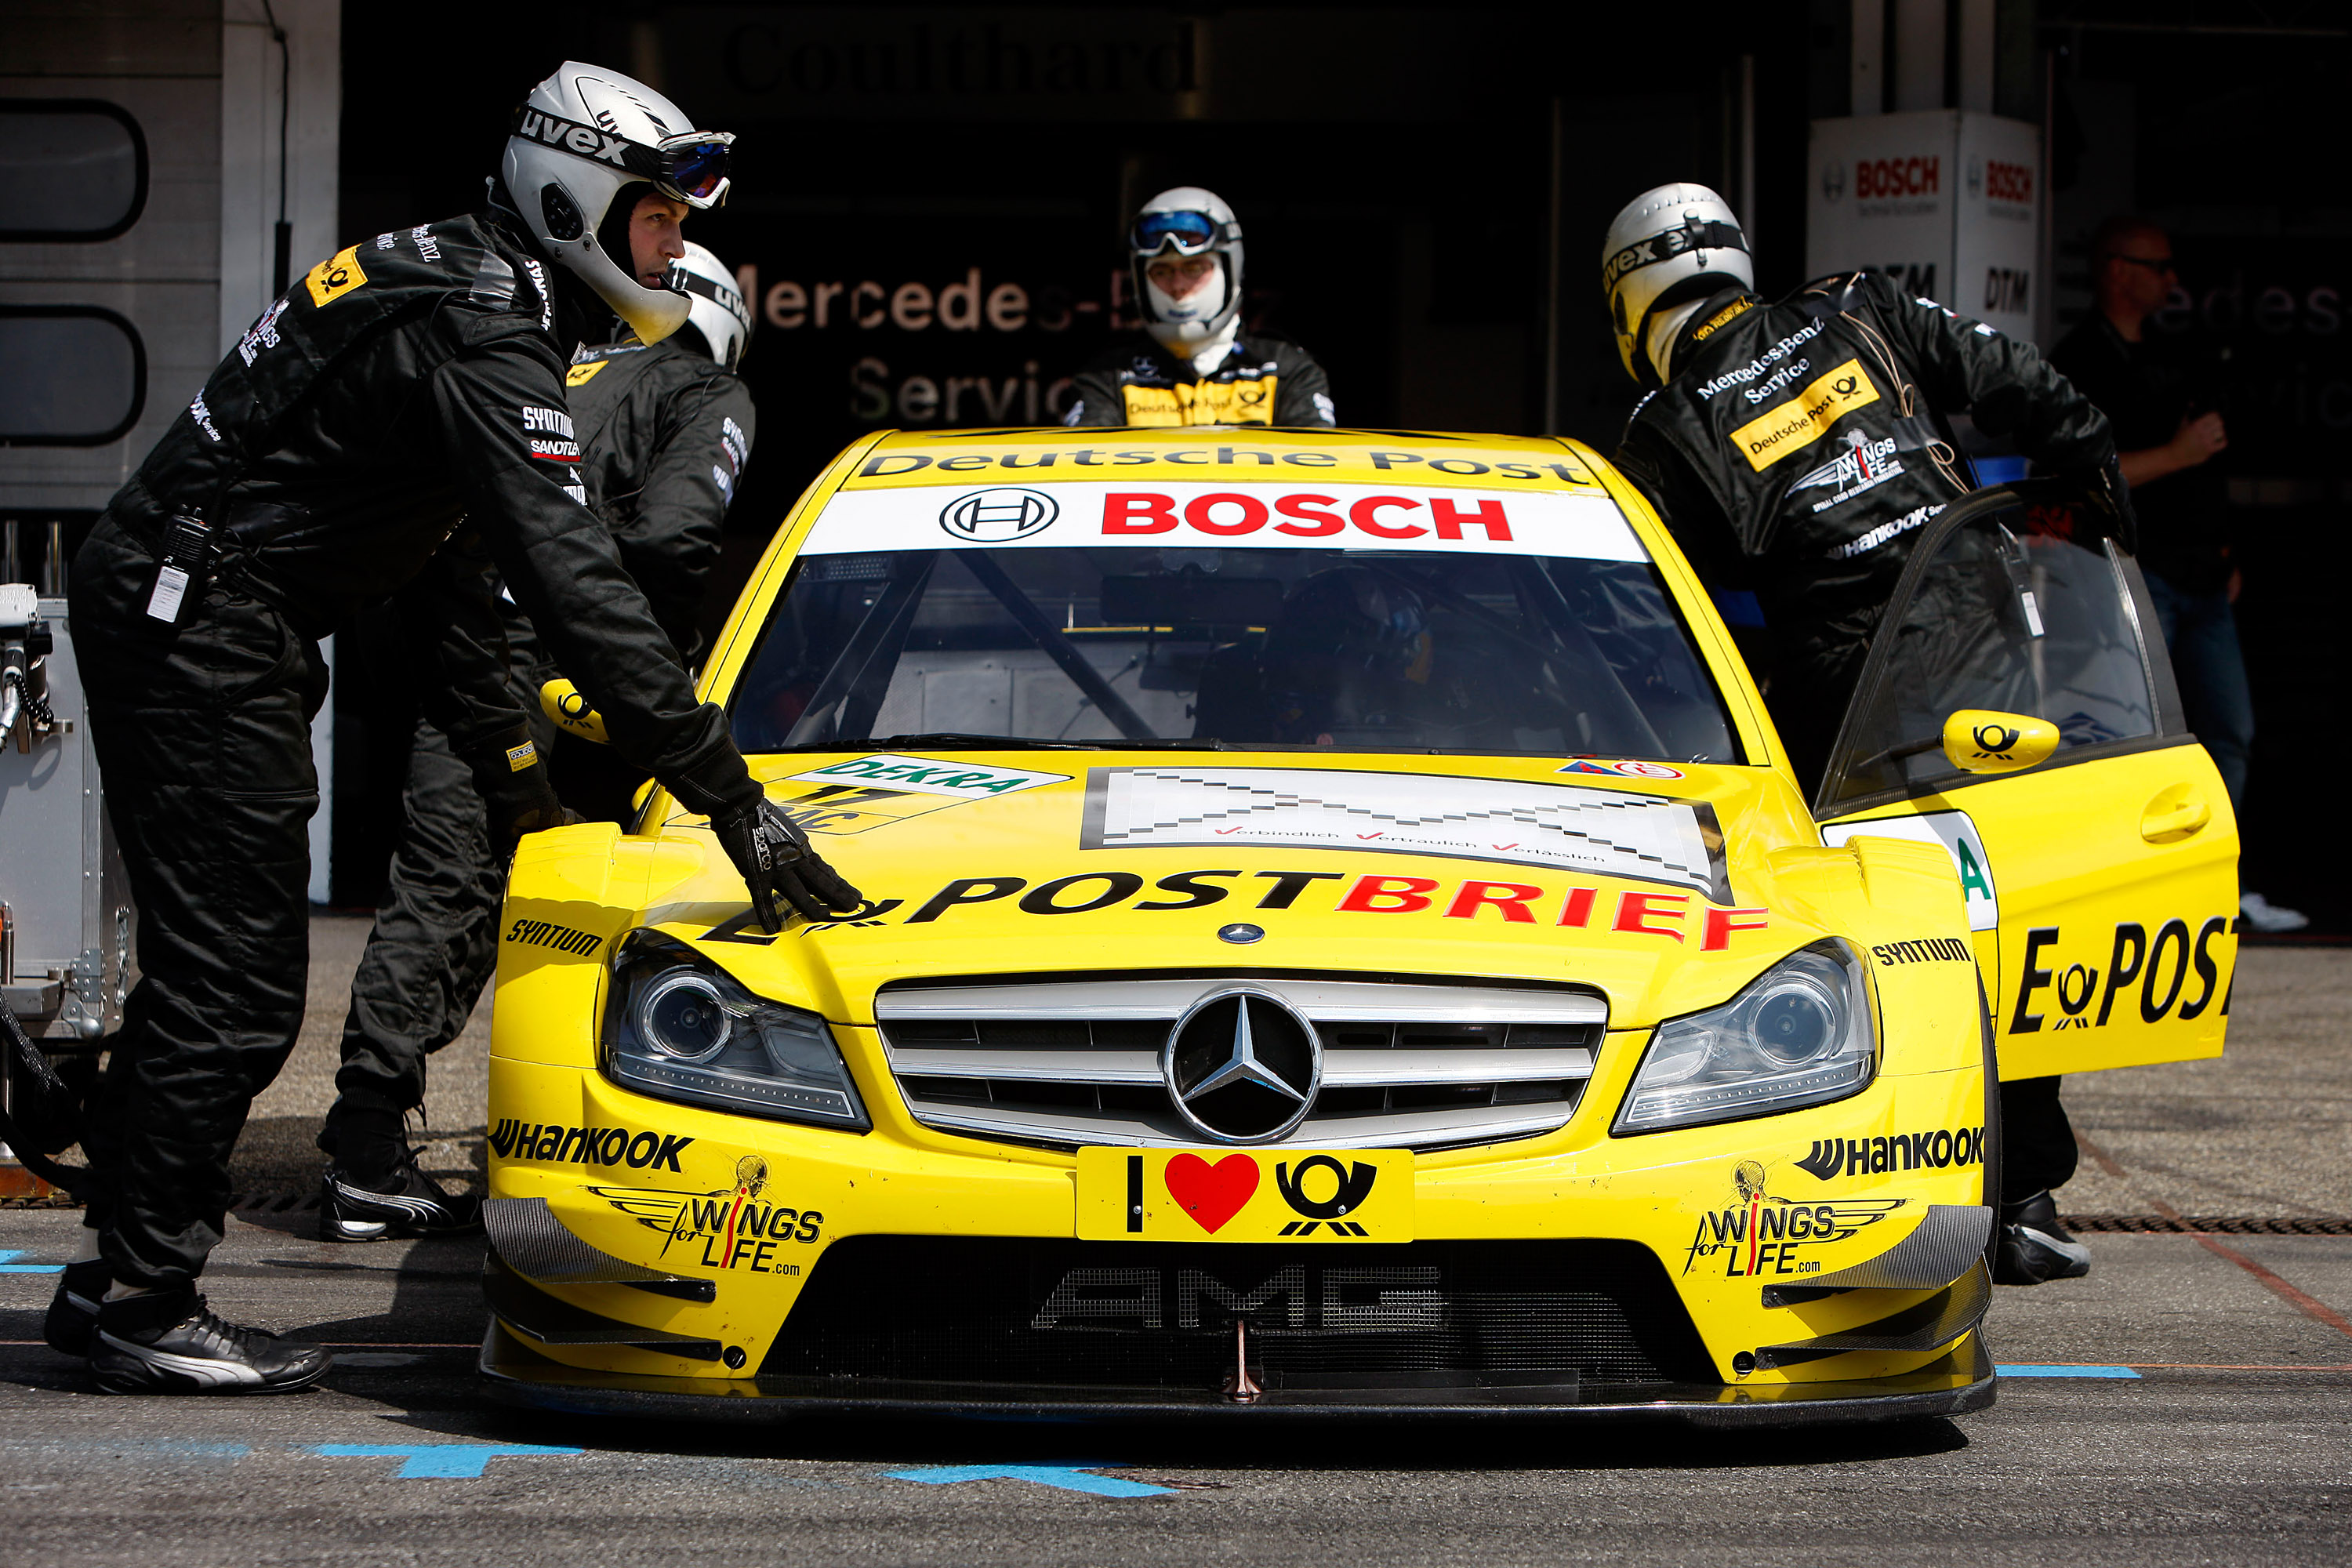 2011, Dtm, Mercedes, Benz, Bank, Amg, C class, Race, Racing Wallpaper